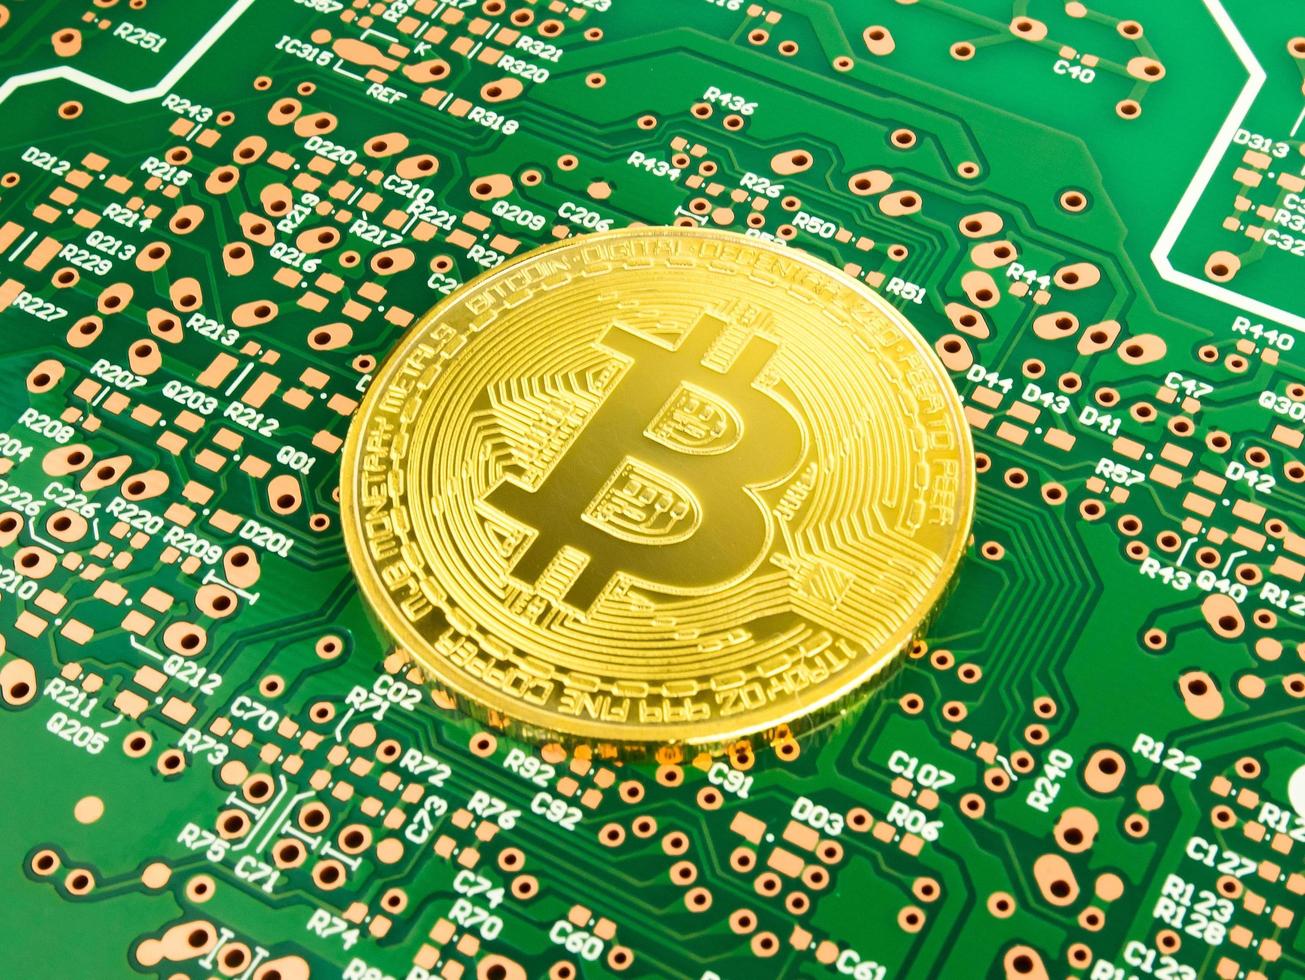 crypto-monnaie bitcoin dorée sur carte de circuit informatique, cartes de circuits imprimés, pcb photo